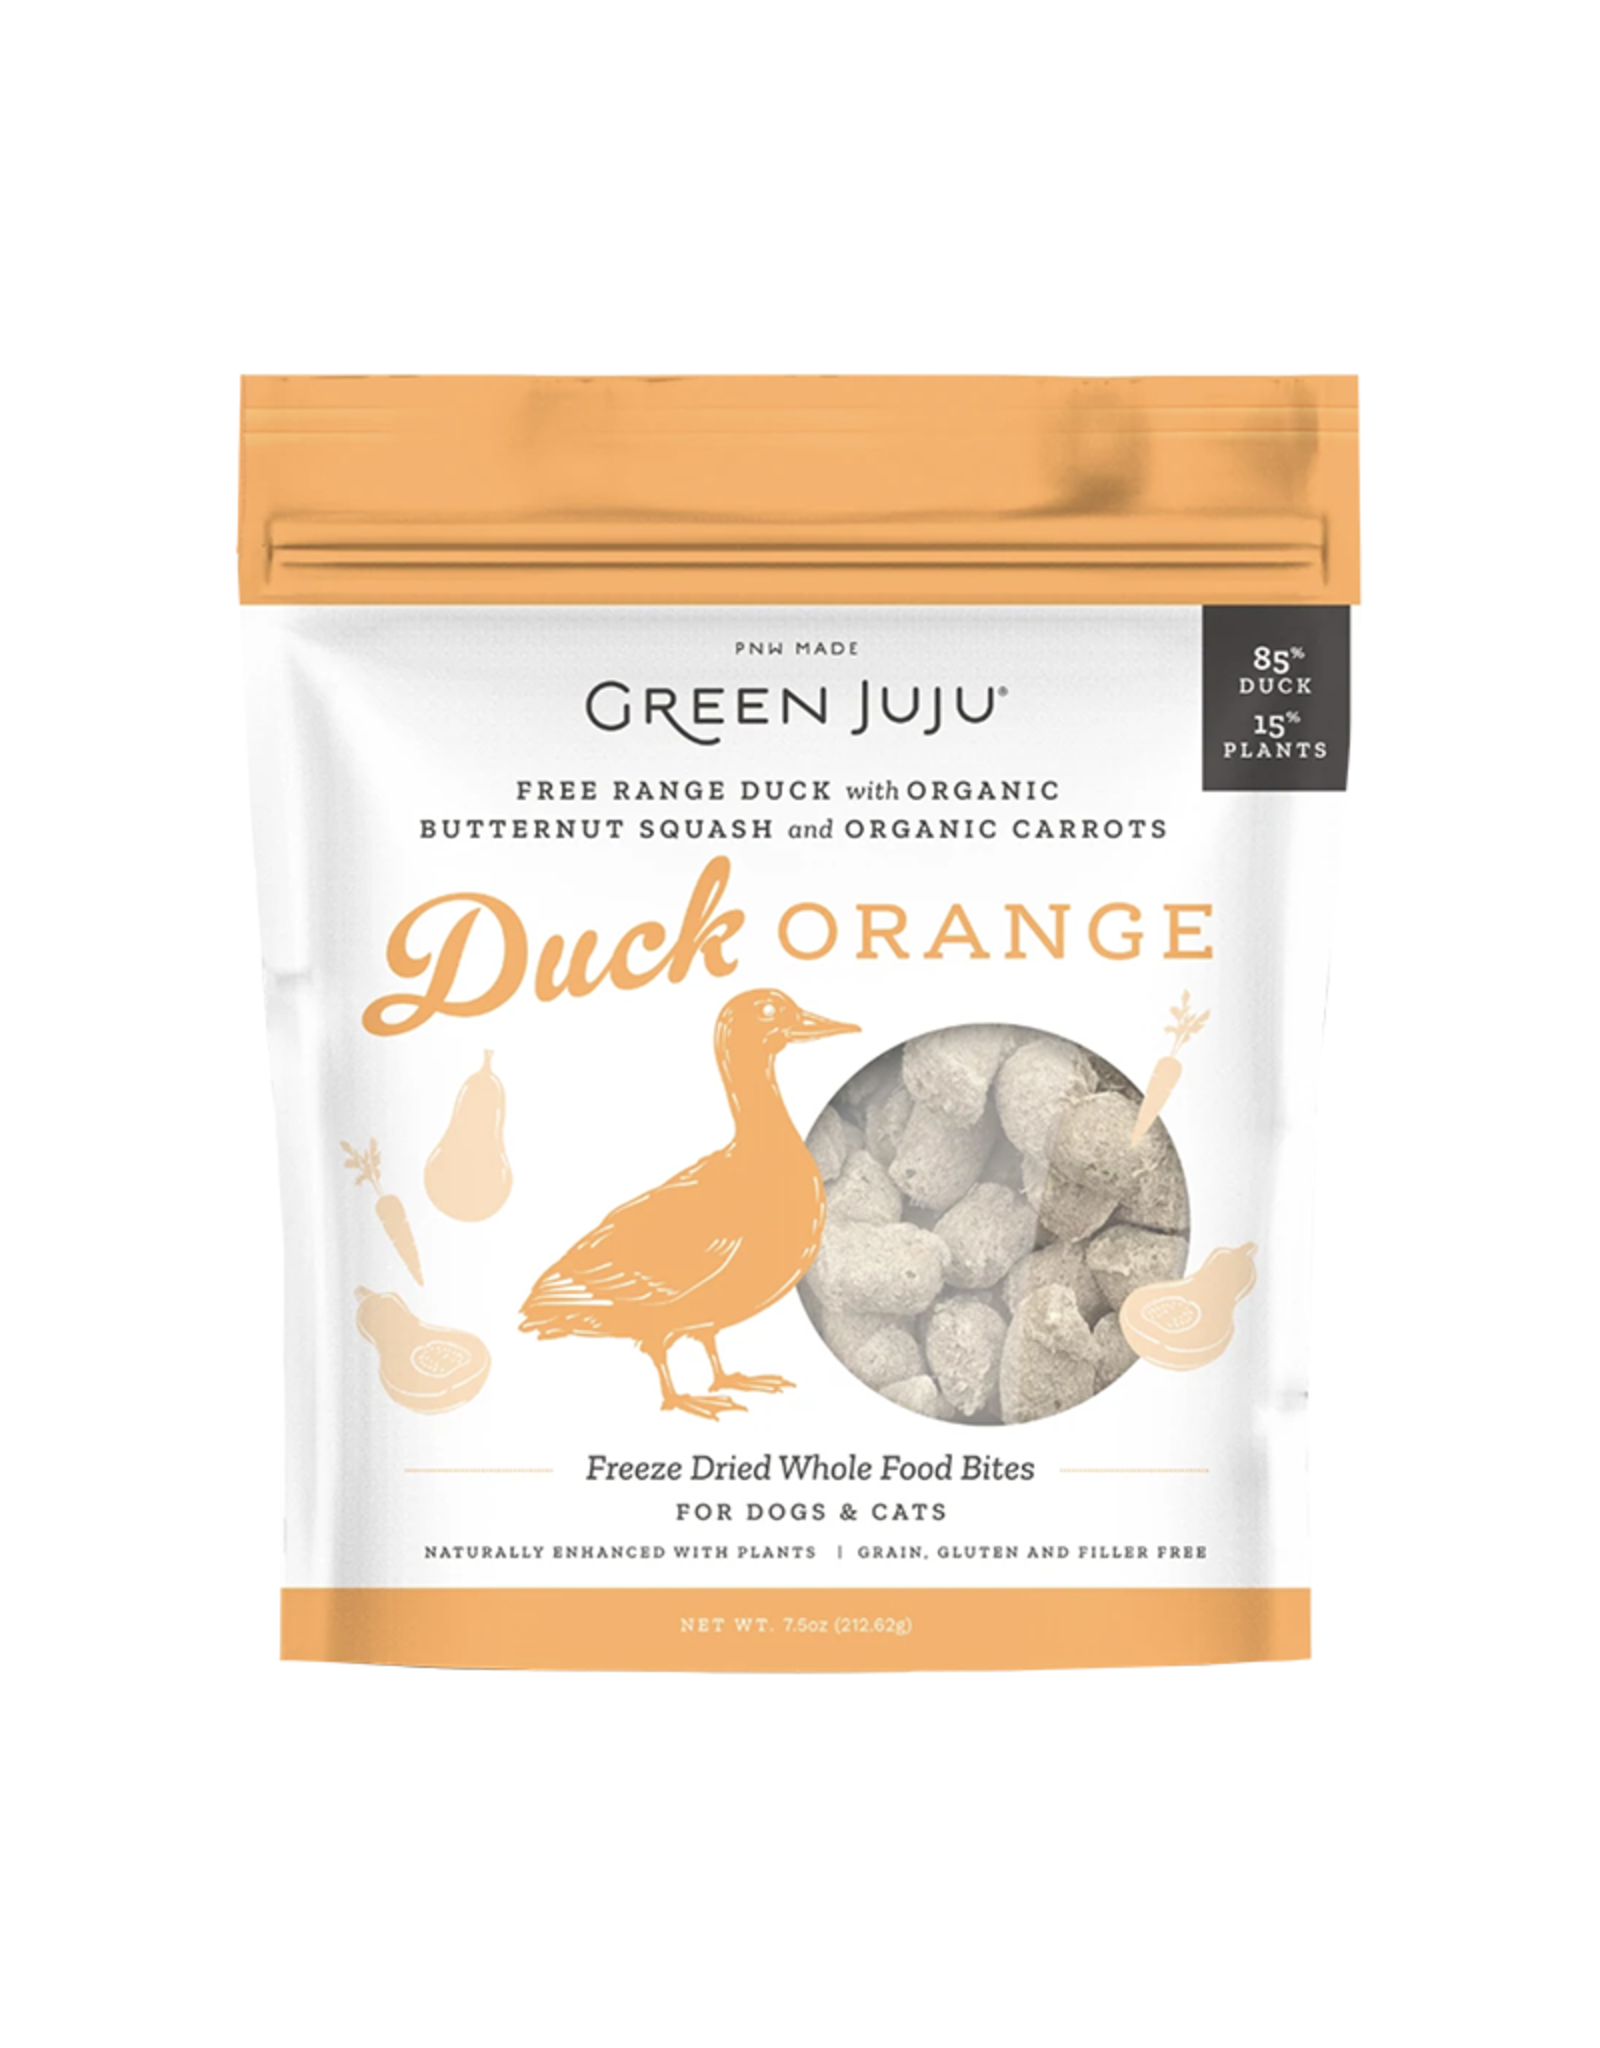 Green Juju Green Juju Freeze Dried Duck Orange